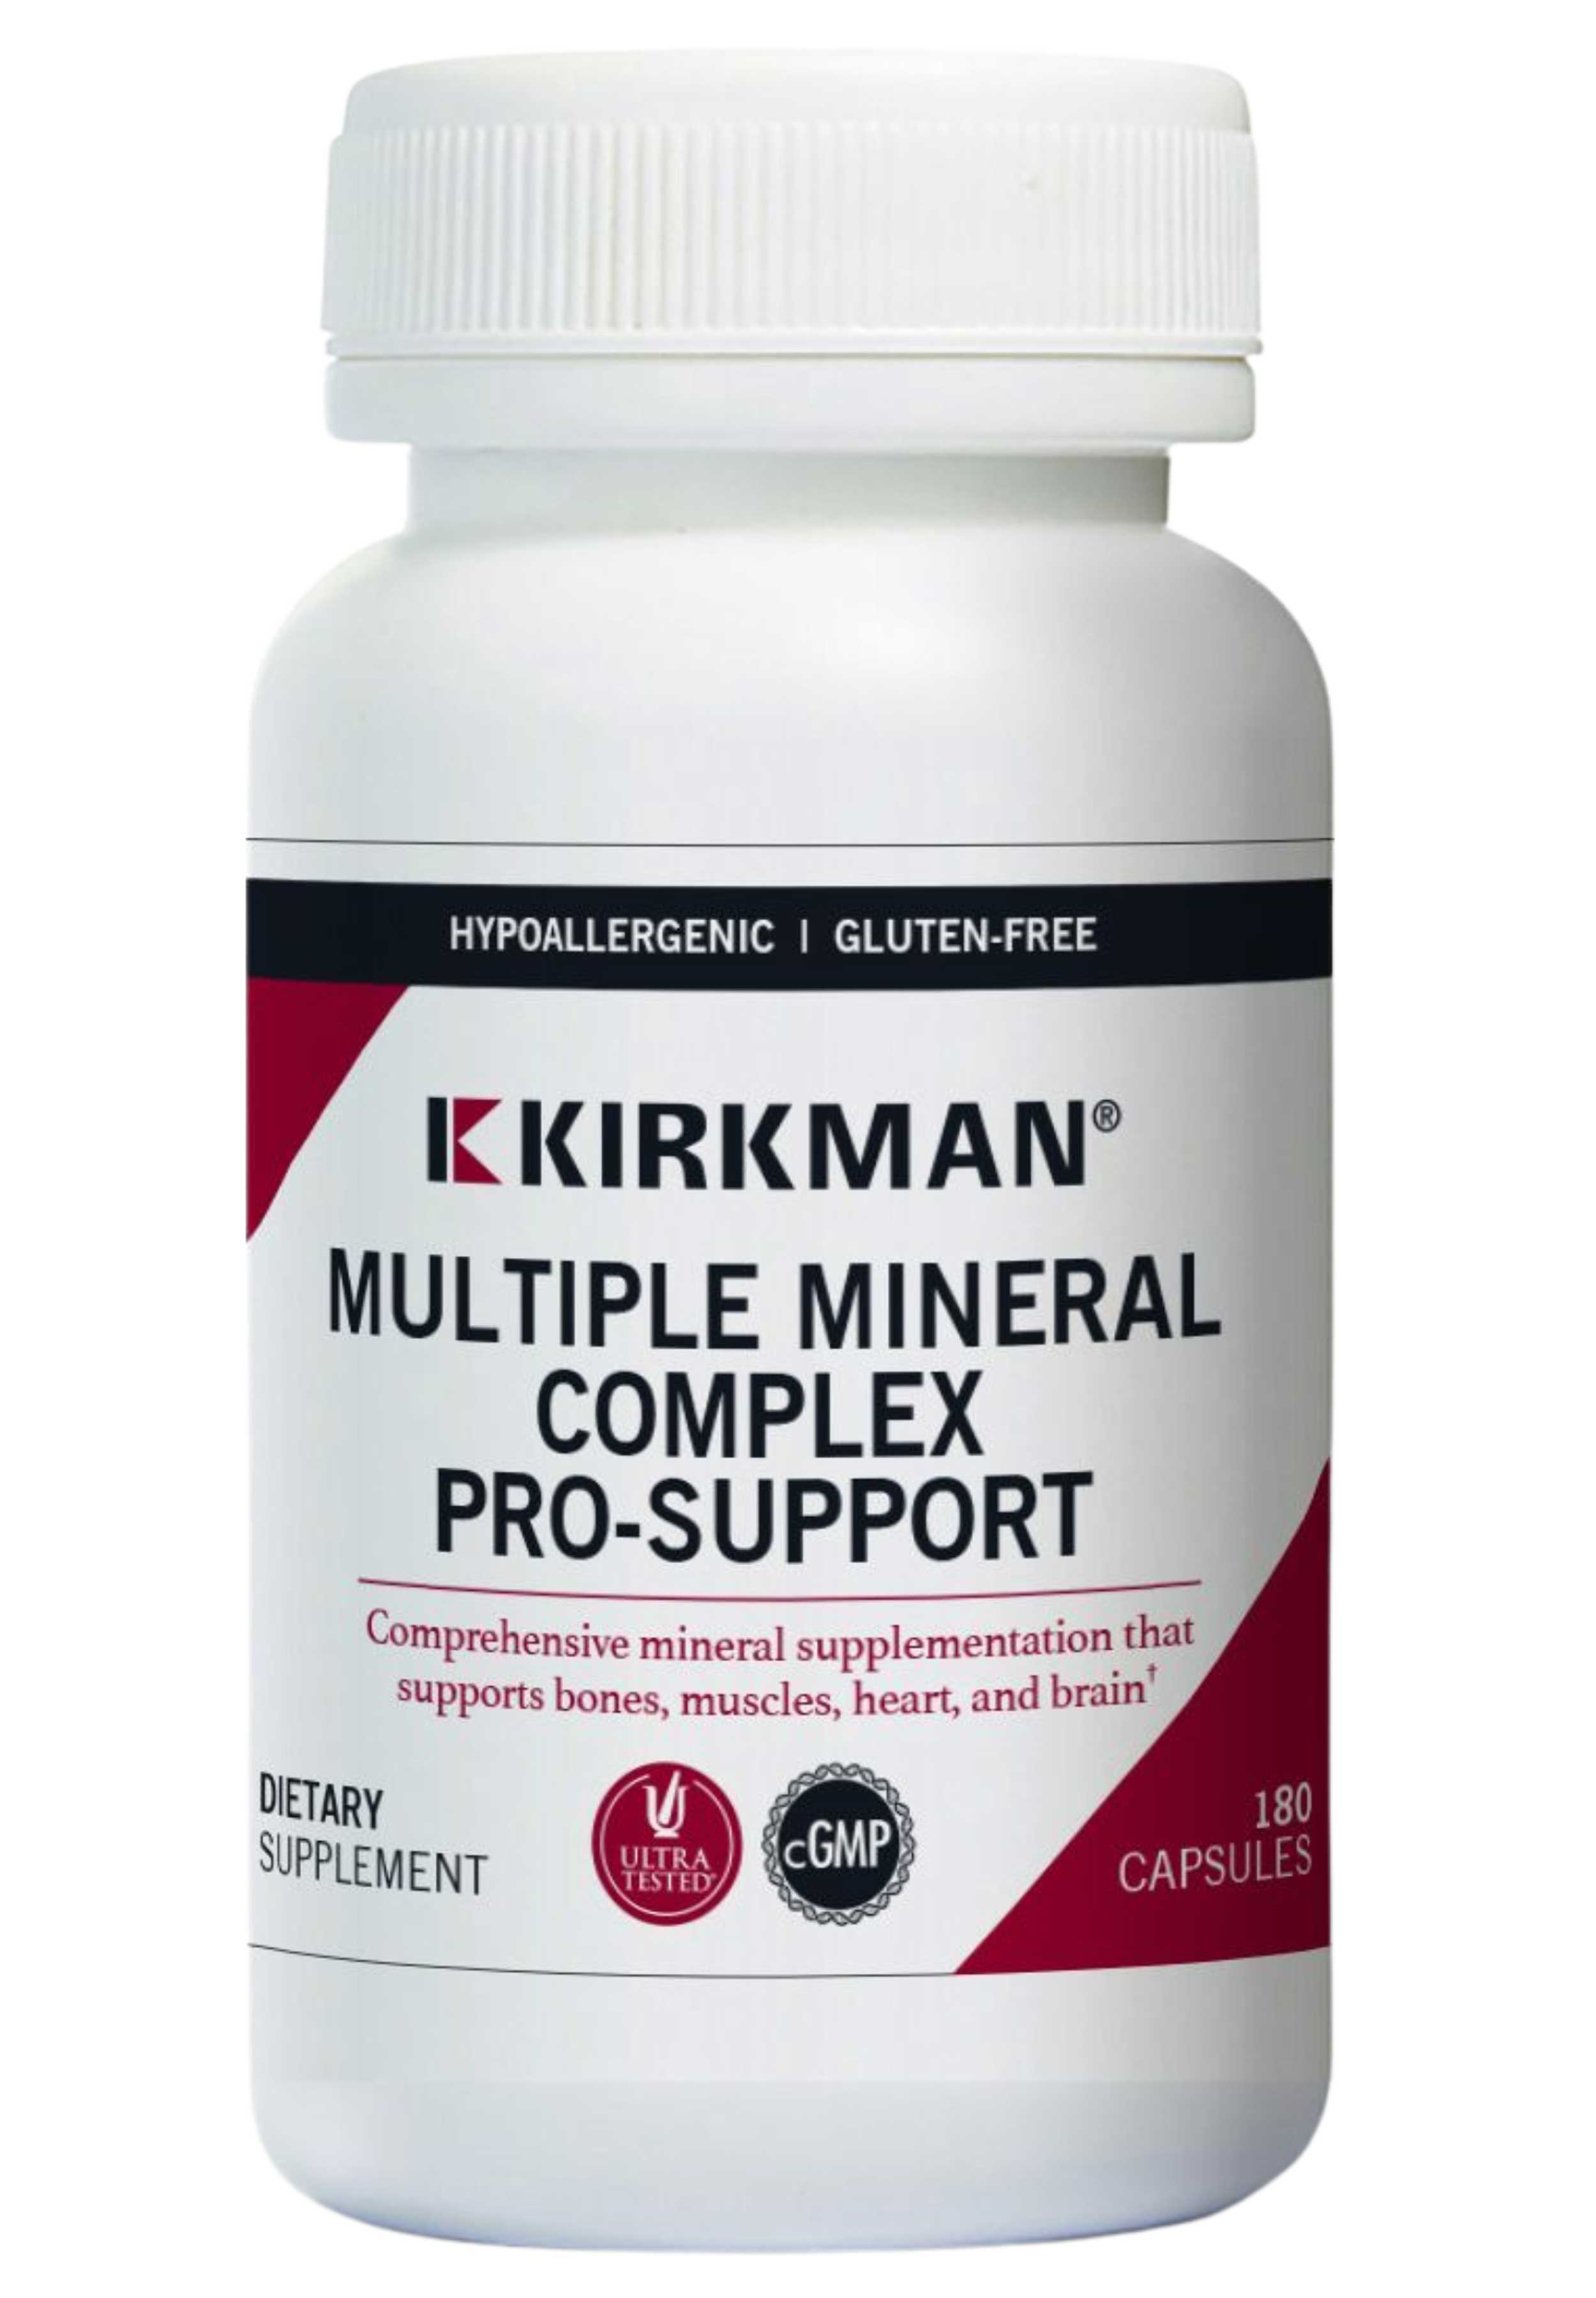 Kirkman Multiple Mineral Complex Pro-Support